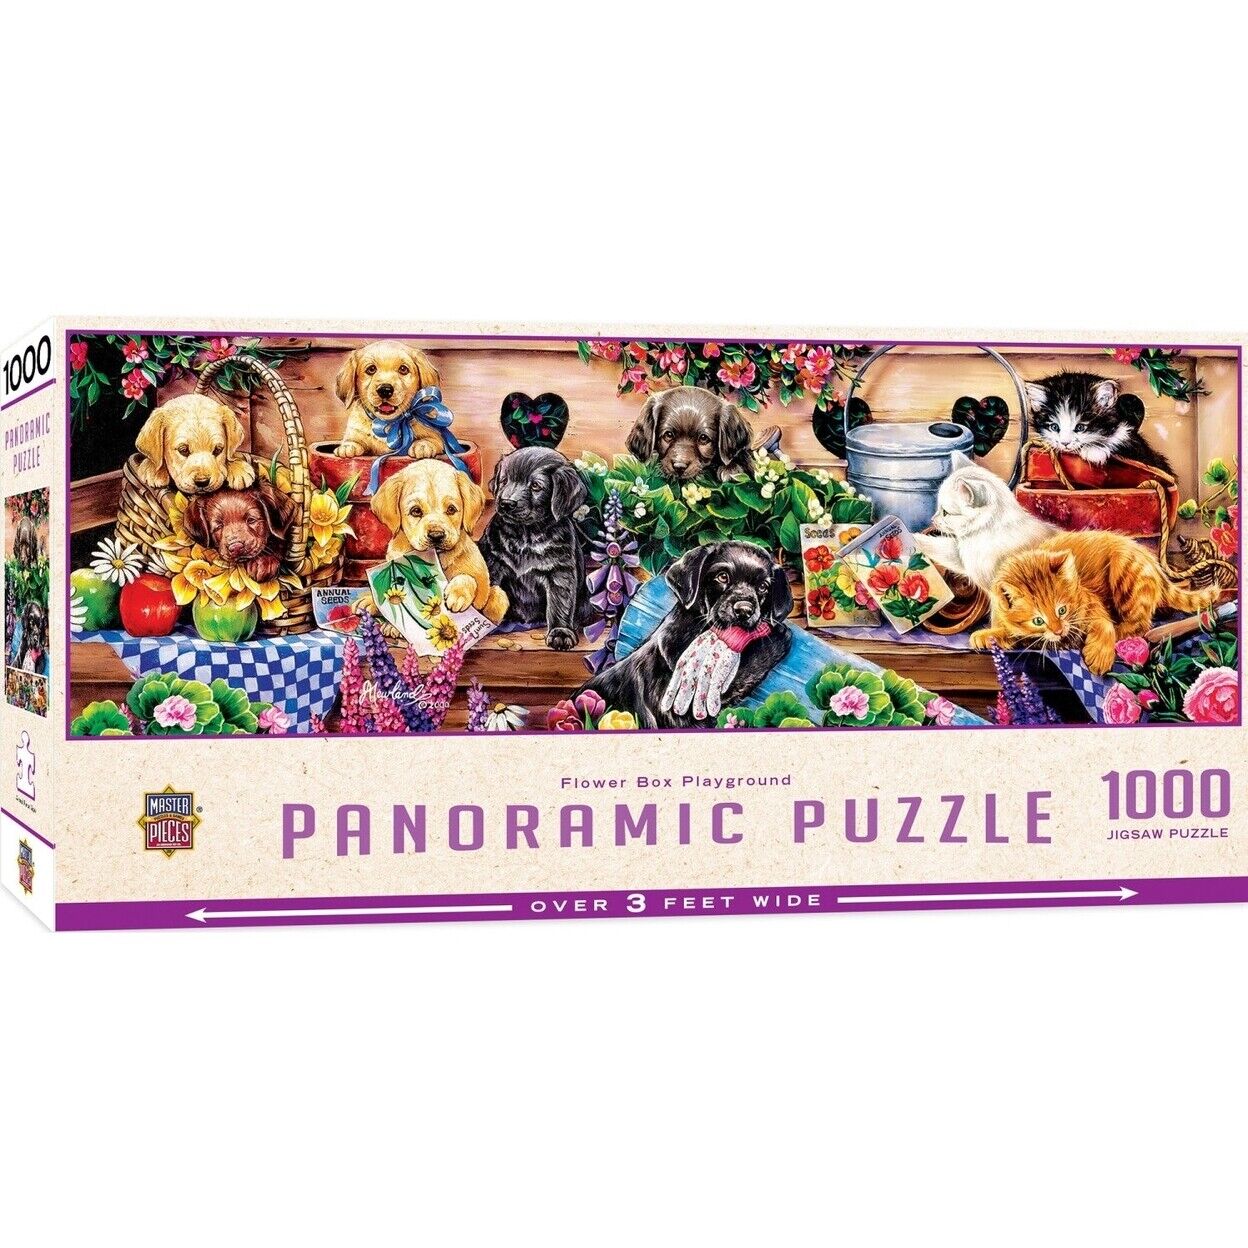 Flower Box Playground 1000 Piece Panormic Jigsaw Puzzle